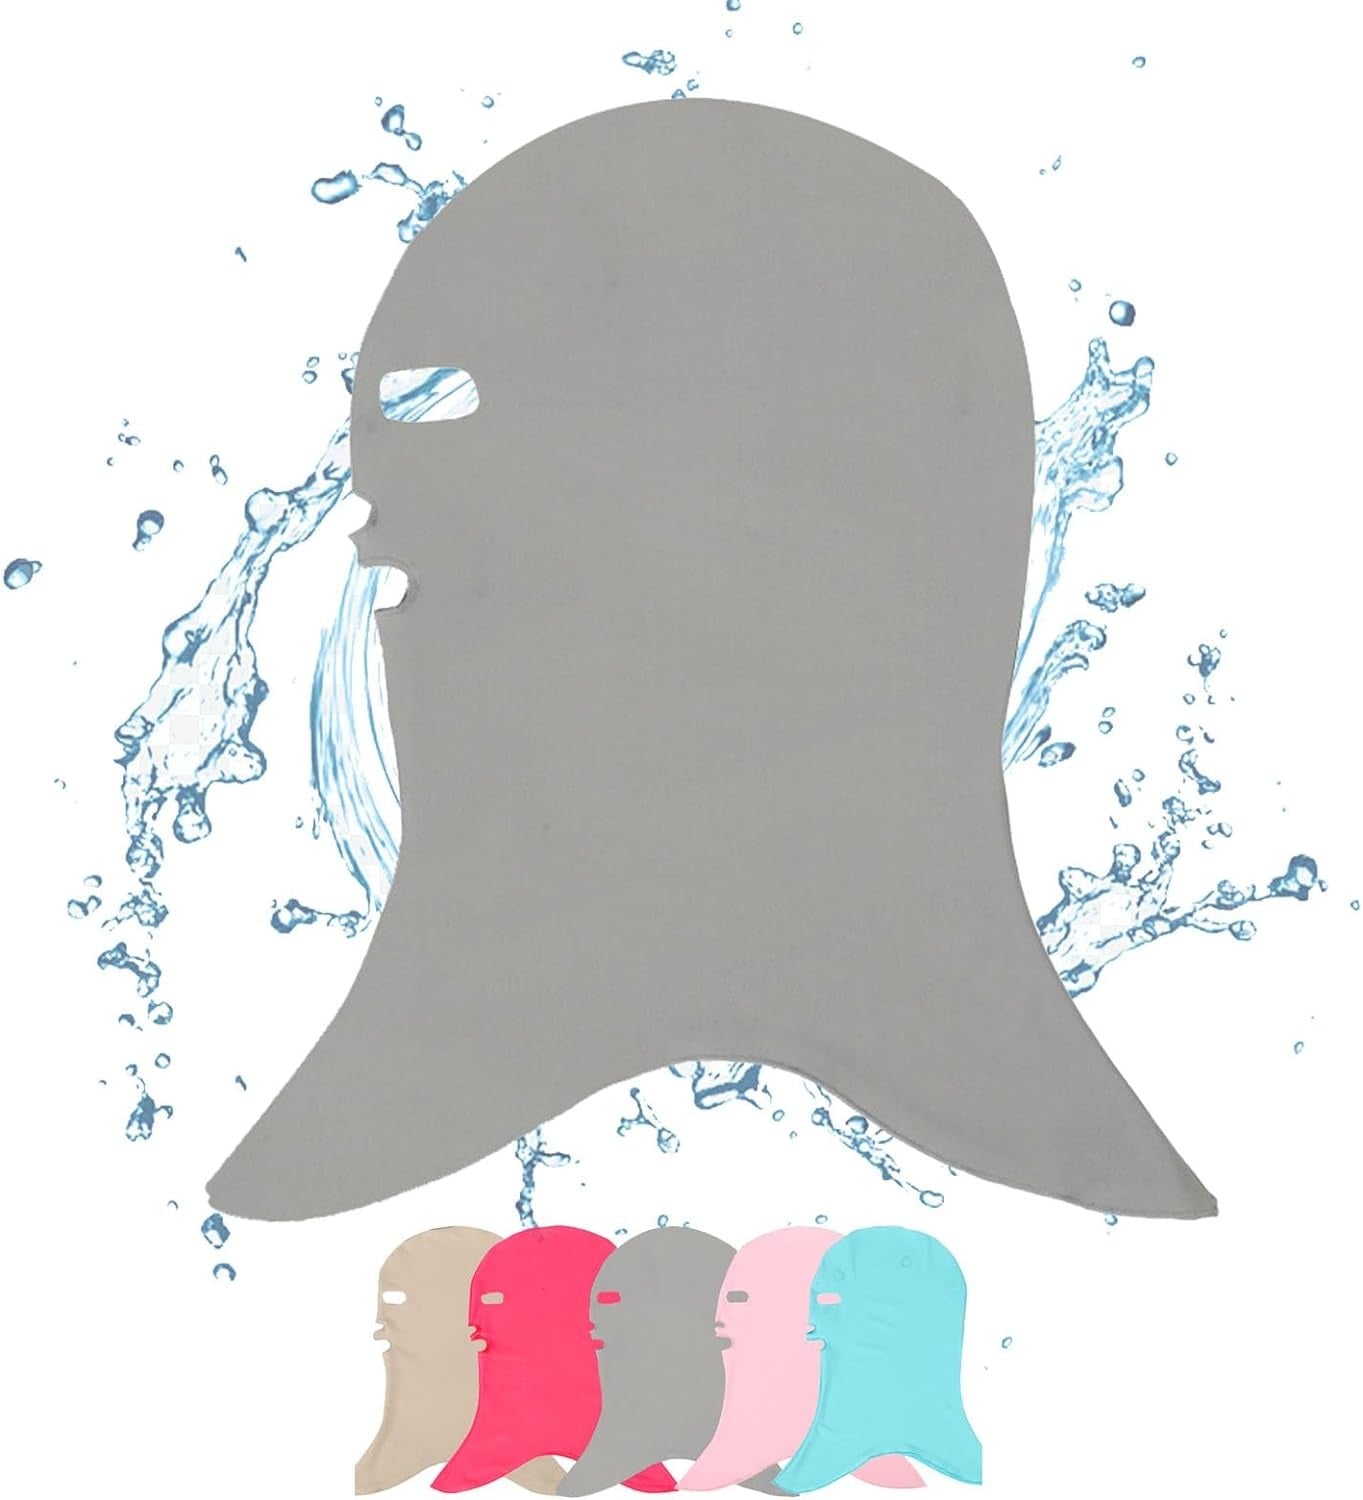 Facekini - Facekini Mask,Facekini UV Protection Mask Swim Cap